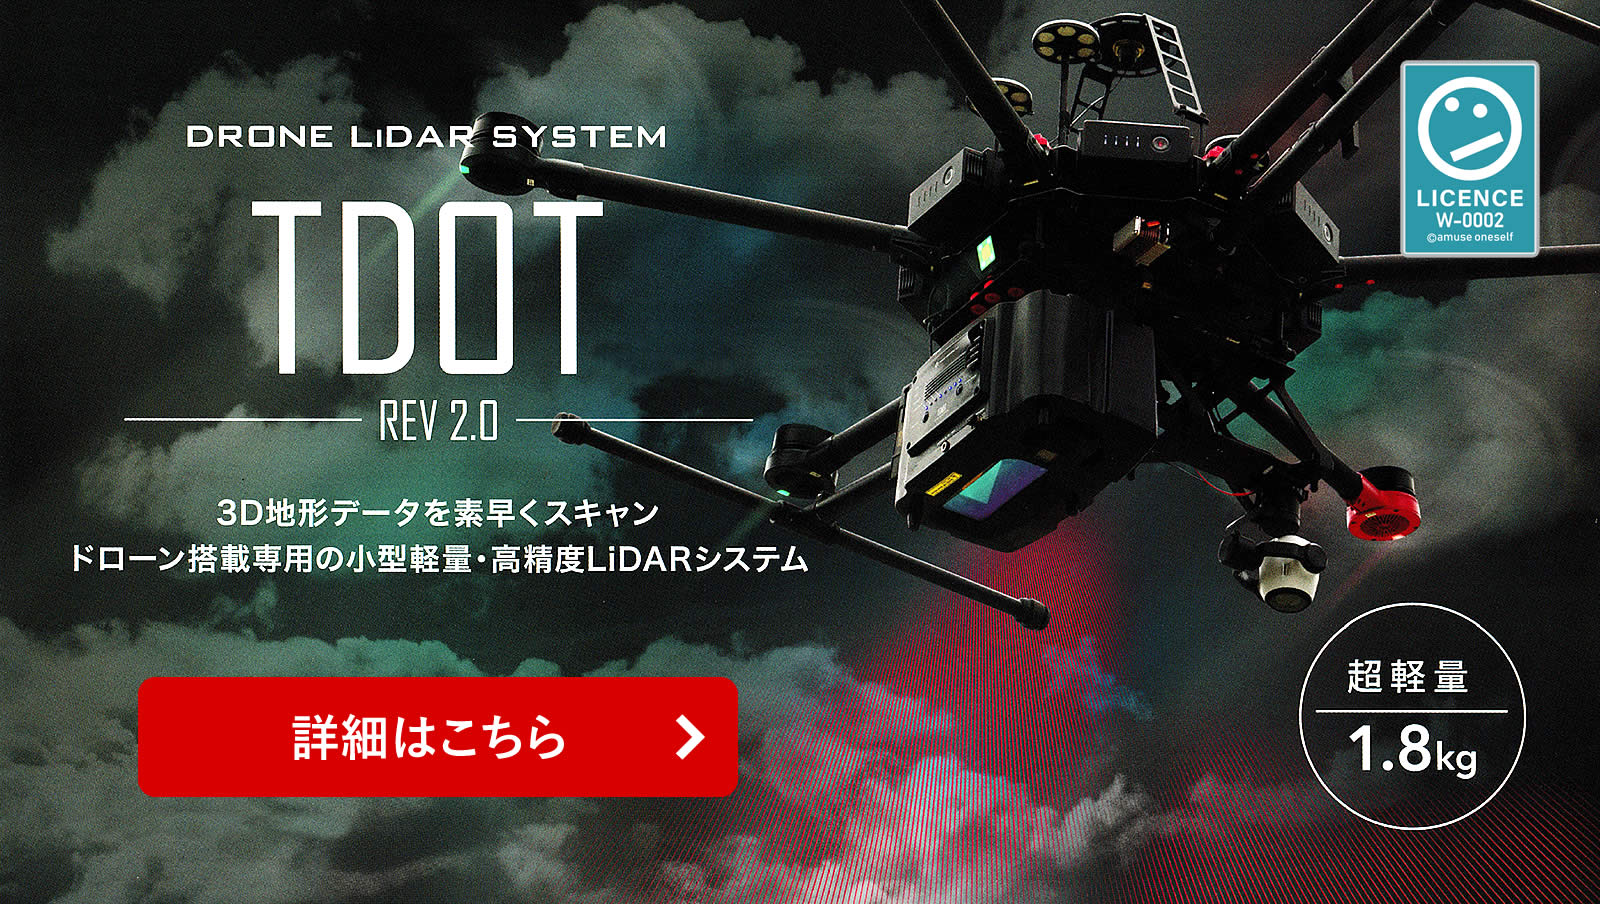 DRONE LiDAR SYSTEM TDOT REV 2.0